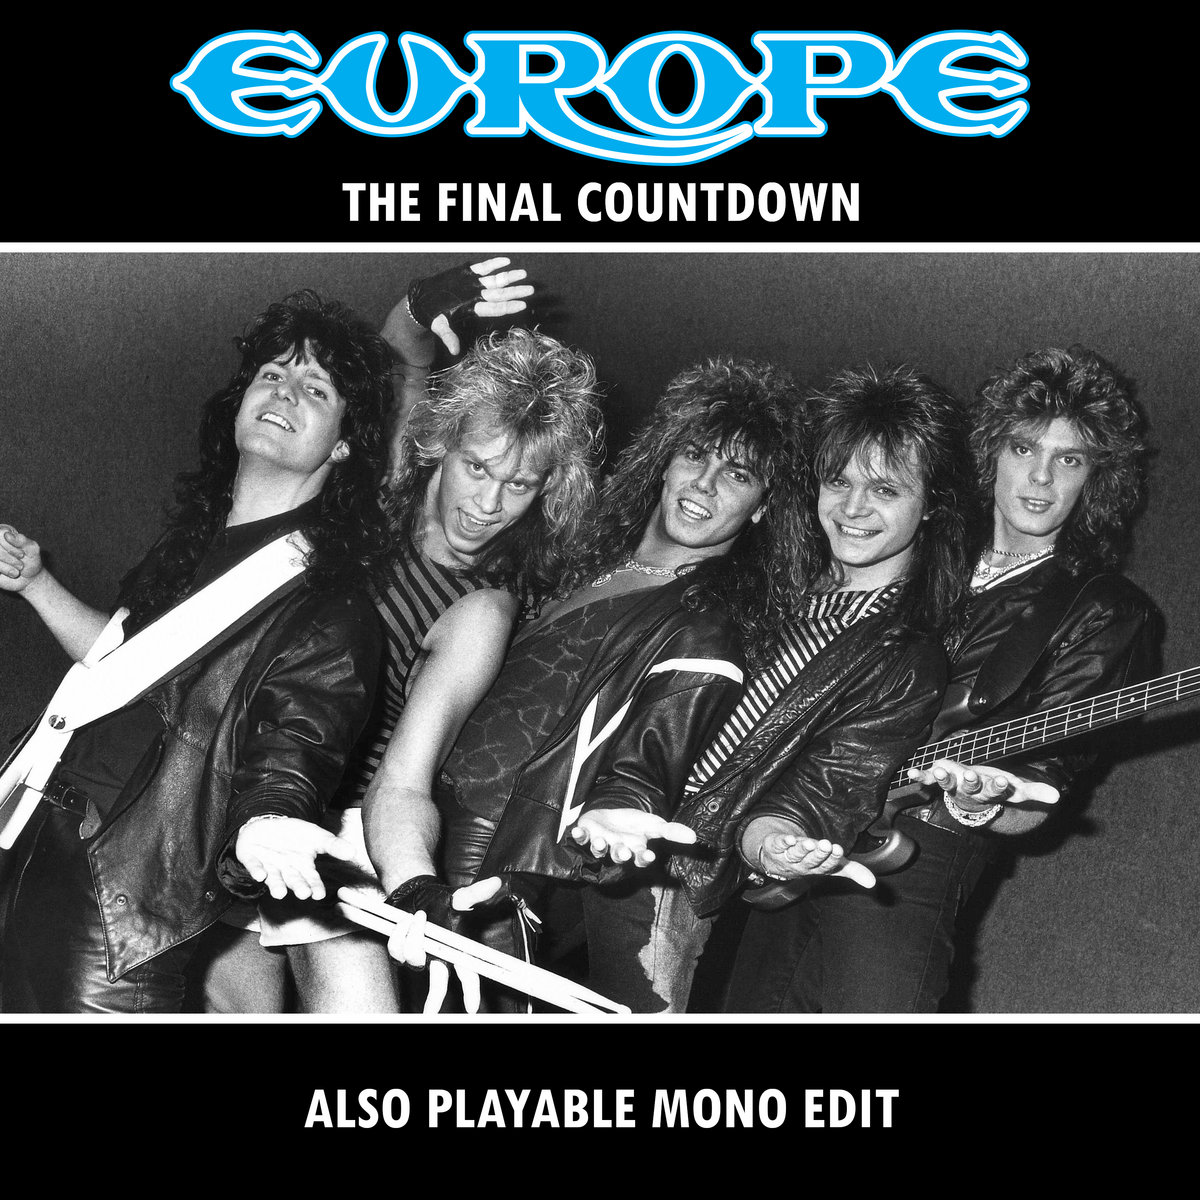 Европа последний отсчет. Группа Europe 1986 the Final Countdown. Europe the Final Countdown обложка. Europe the Final Countdown обложка альбома. The Final Countdown от Europe.